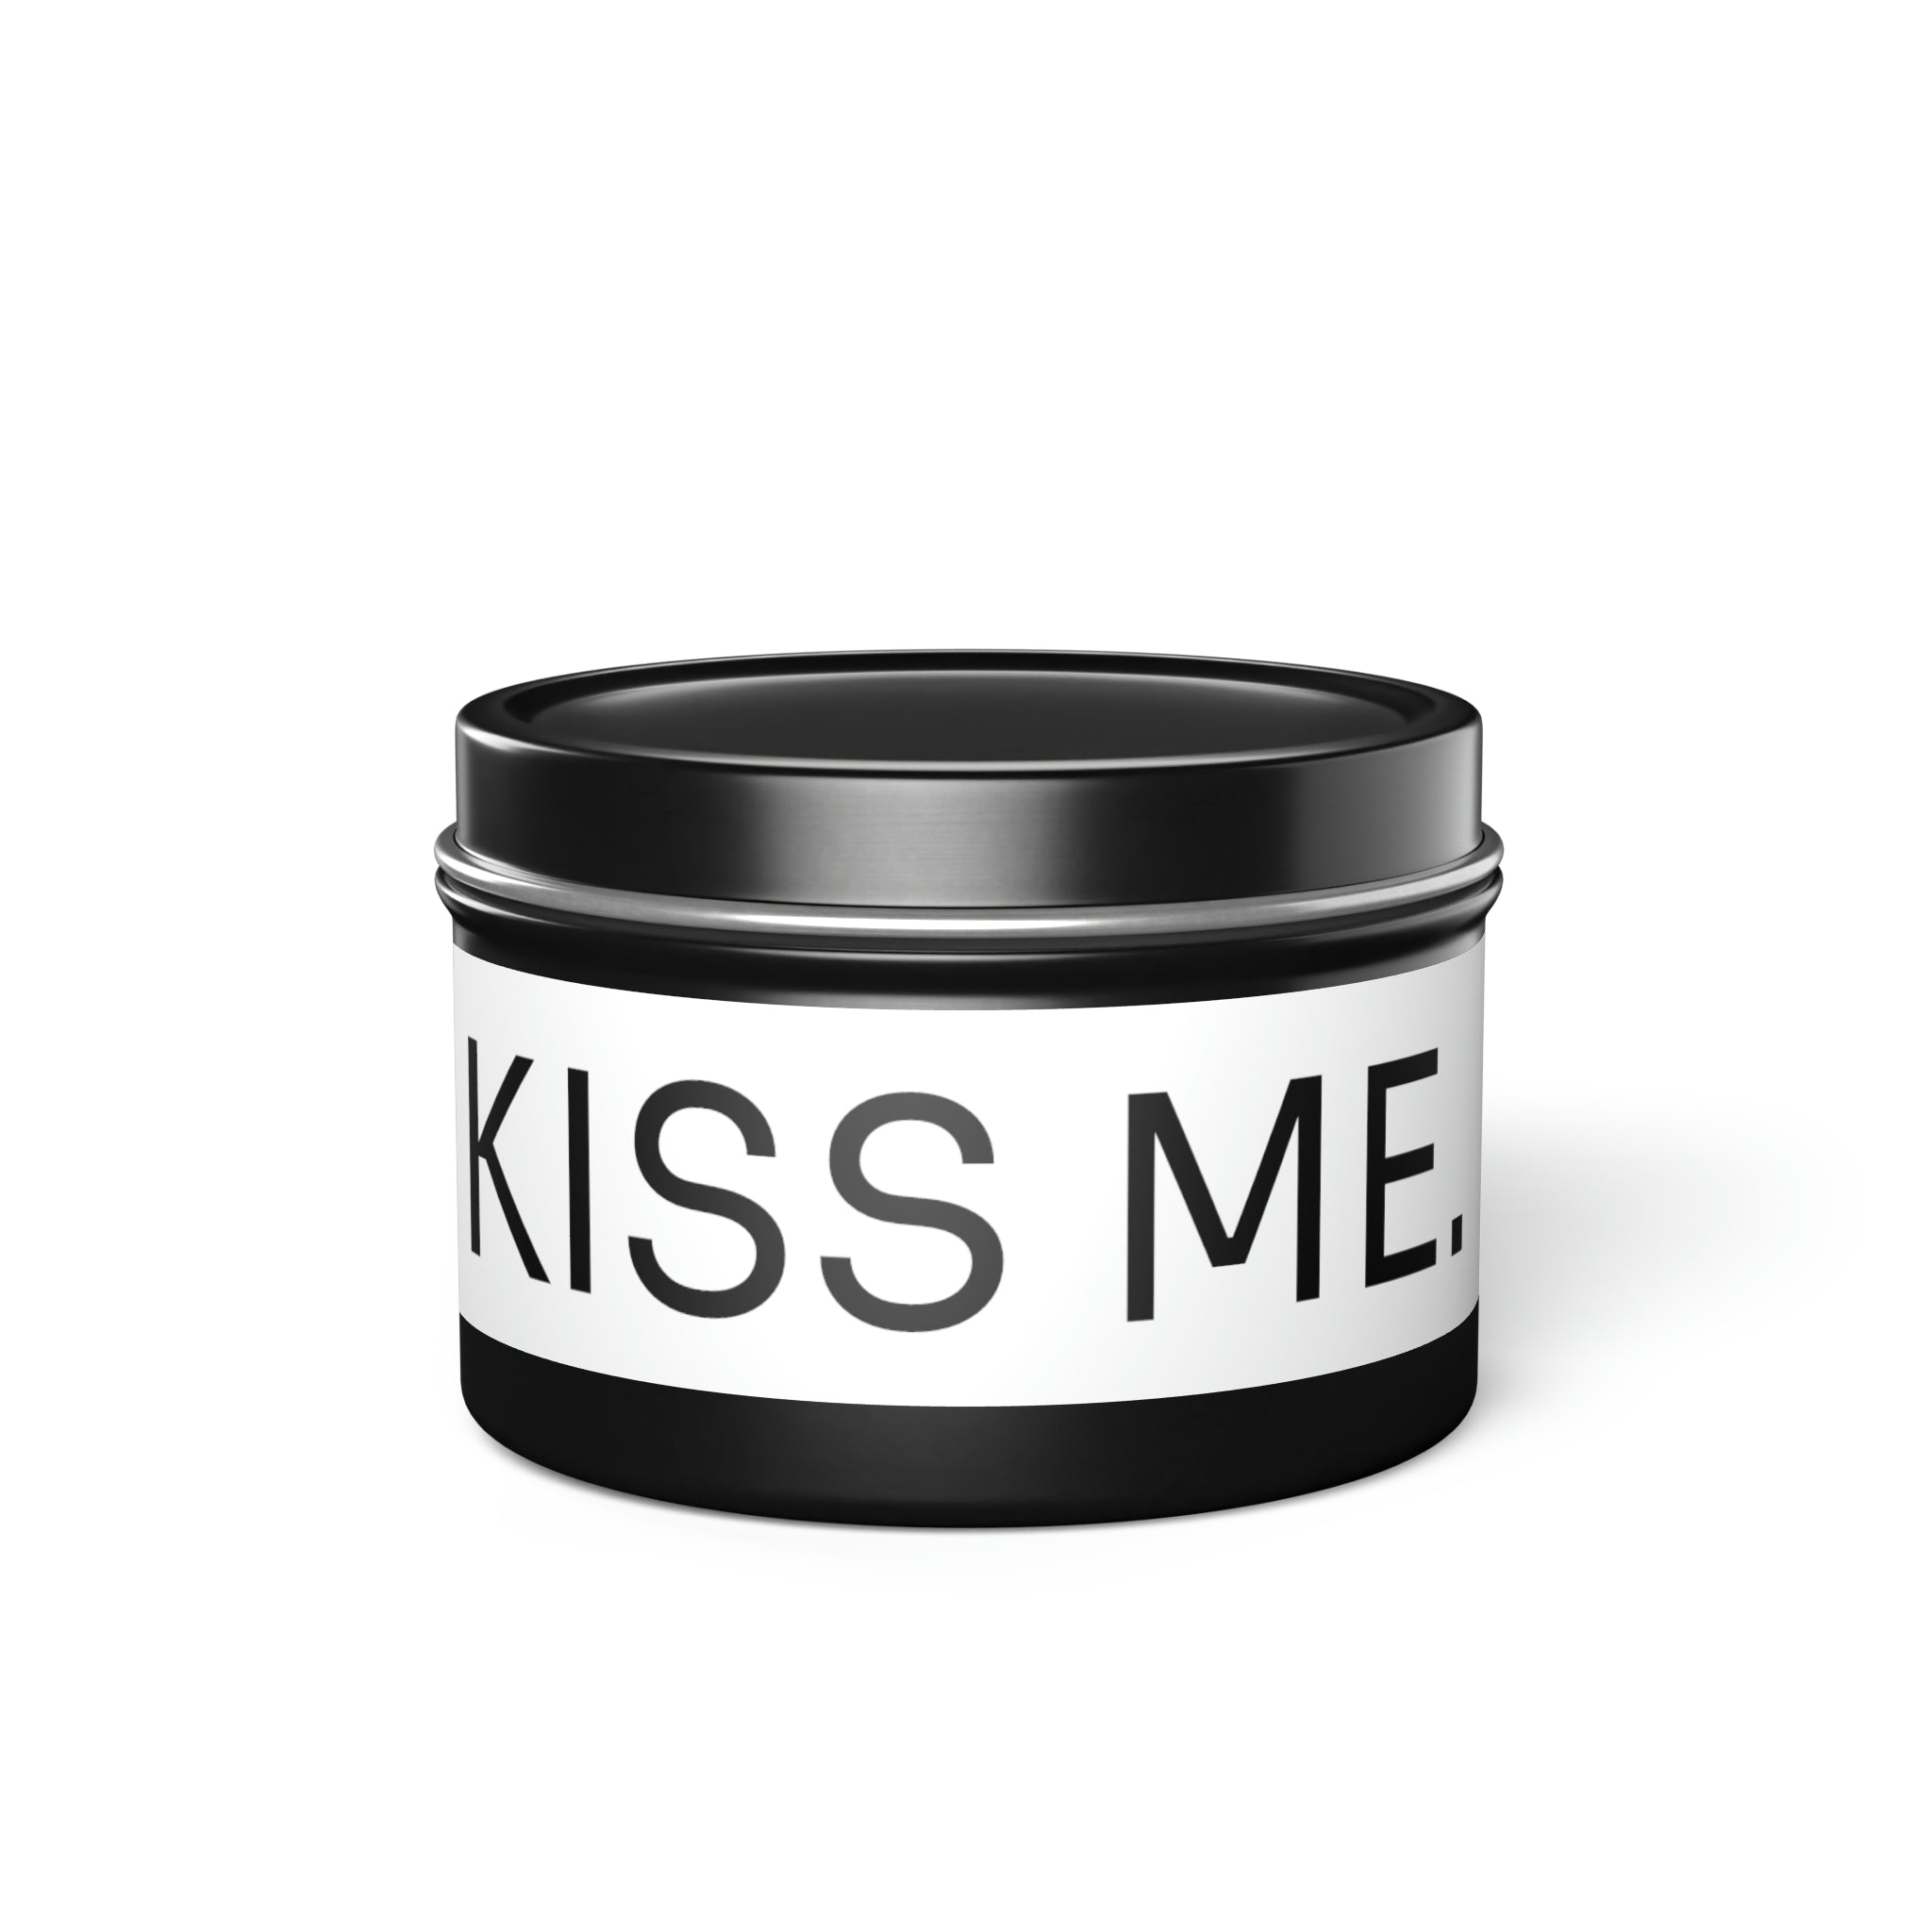 KISS ME Tin Candle